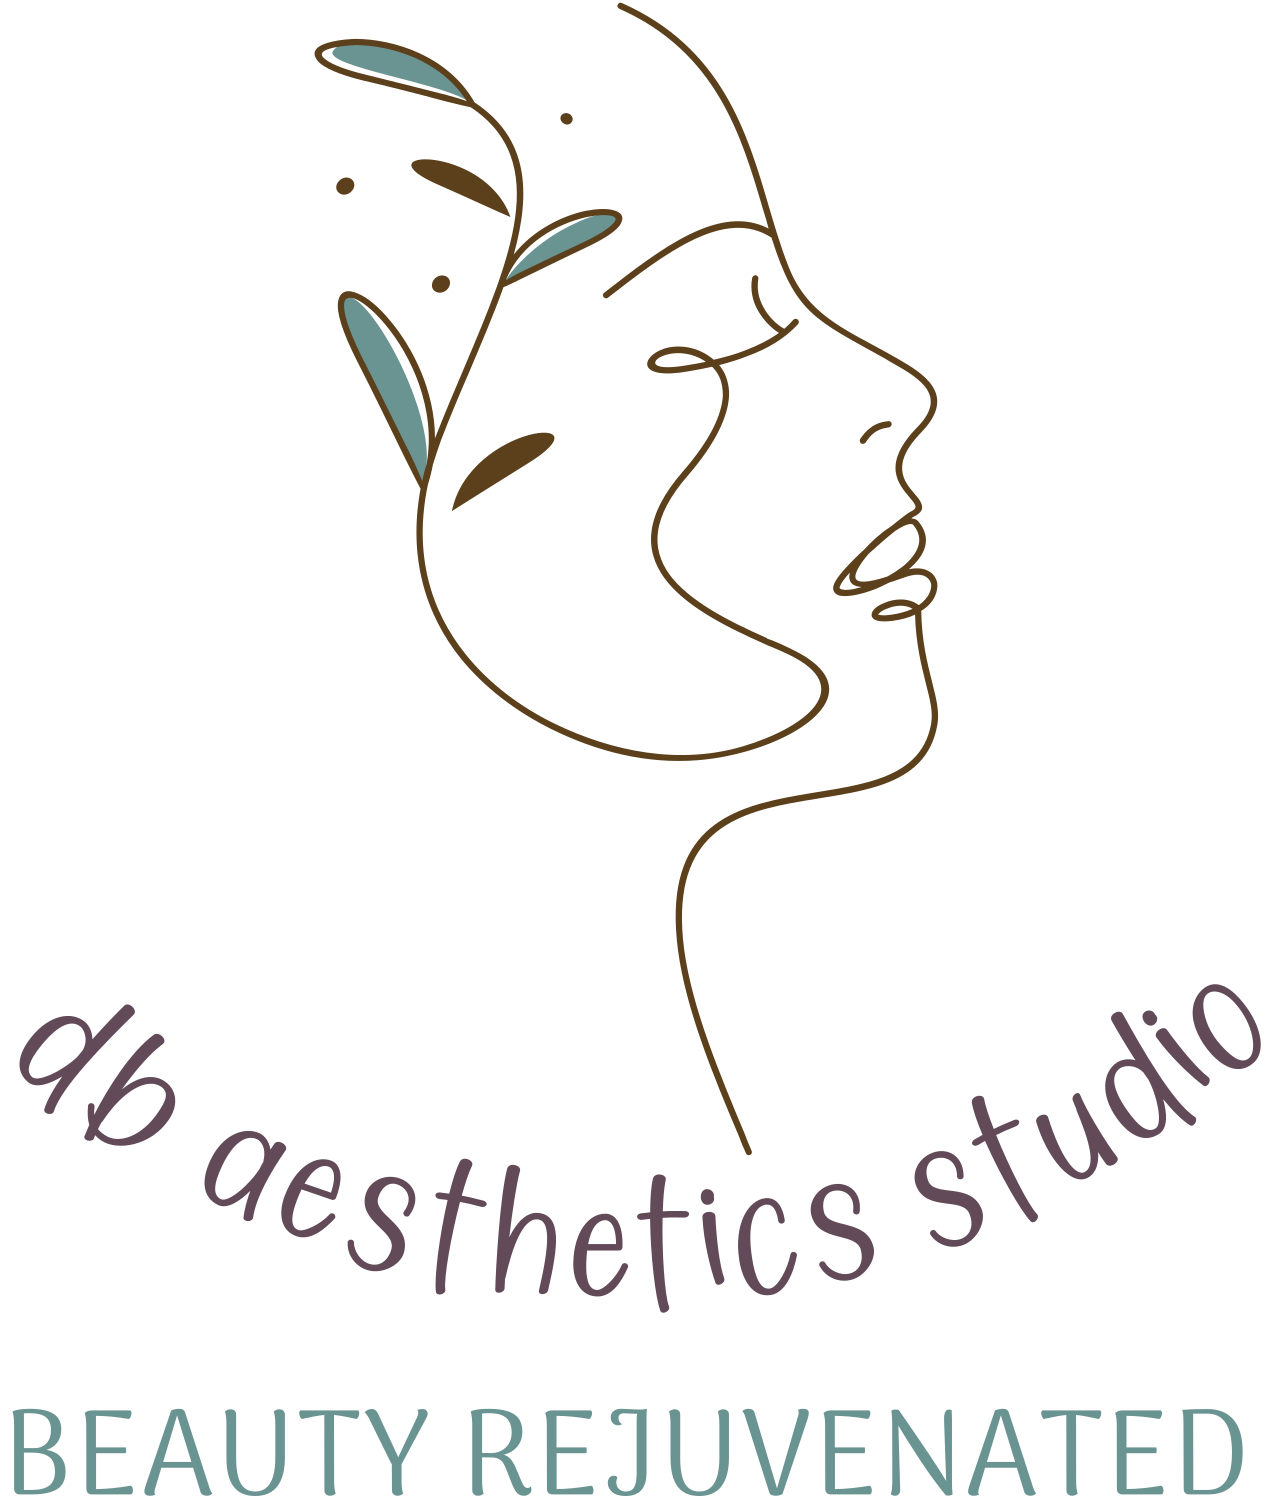  db aesthetics studio's logo